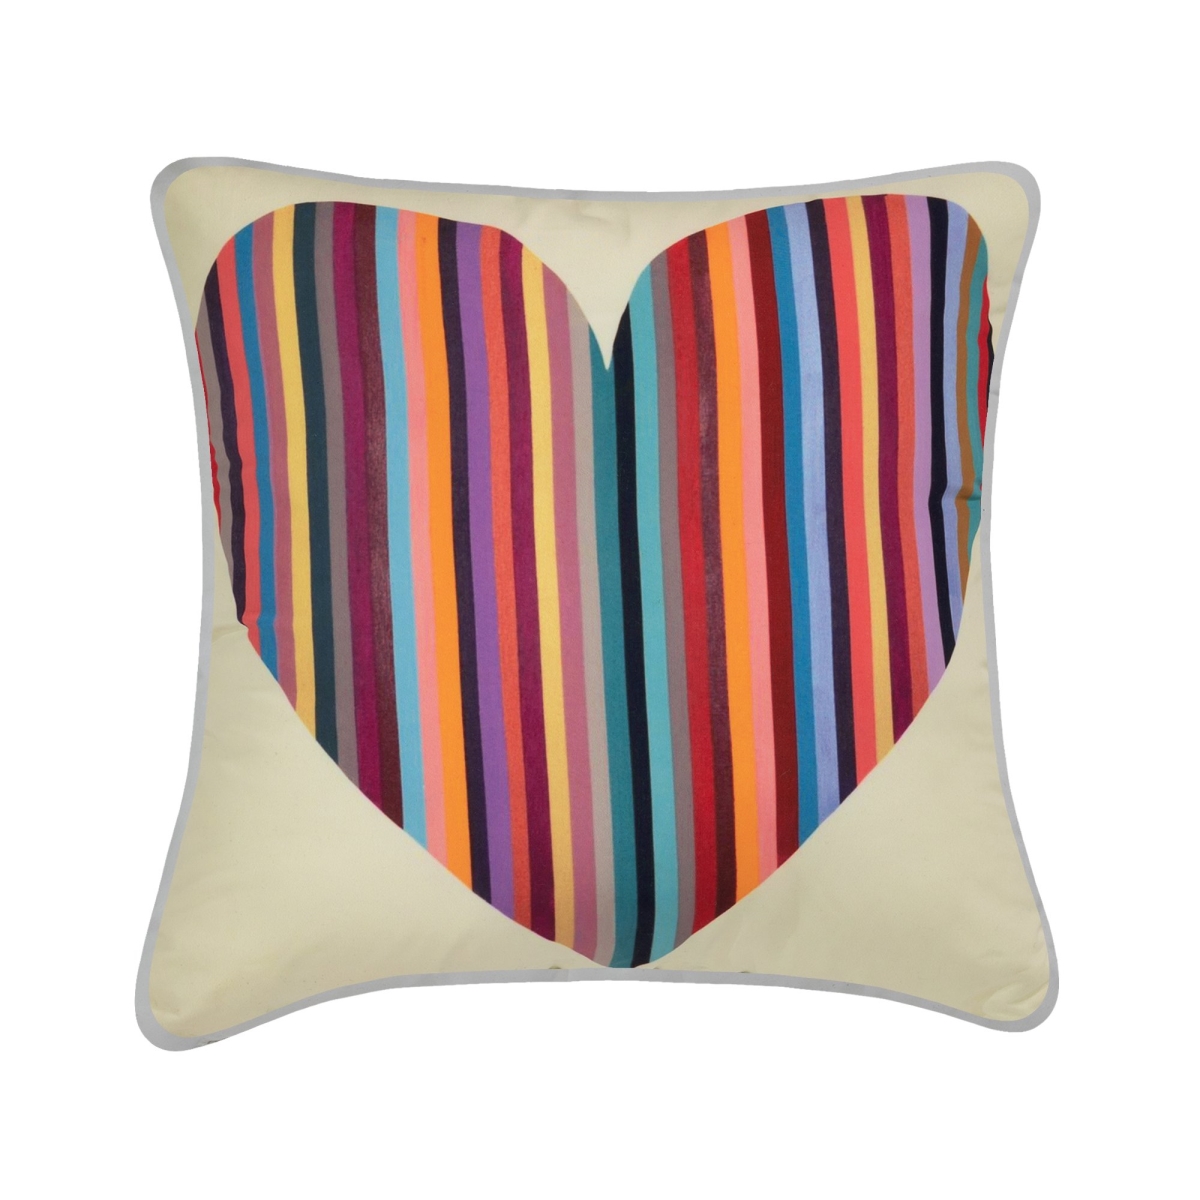 Sq-pi-jg-rahe-1818 18 X 18 In. Jessica Gorlicky Rainbow Heart Decorative Cushion - 100 Percent Polyester